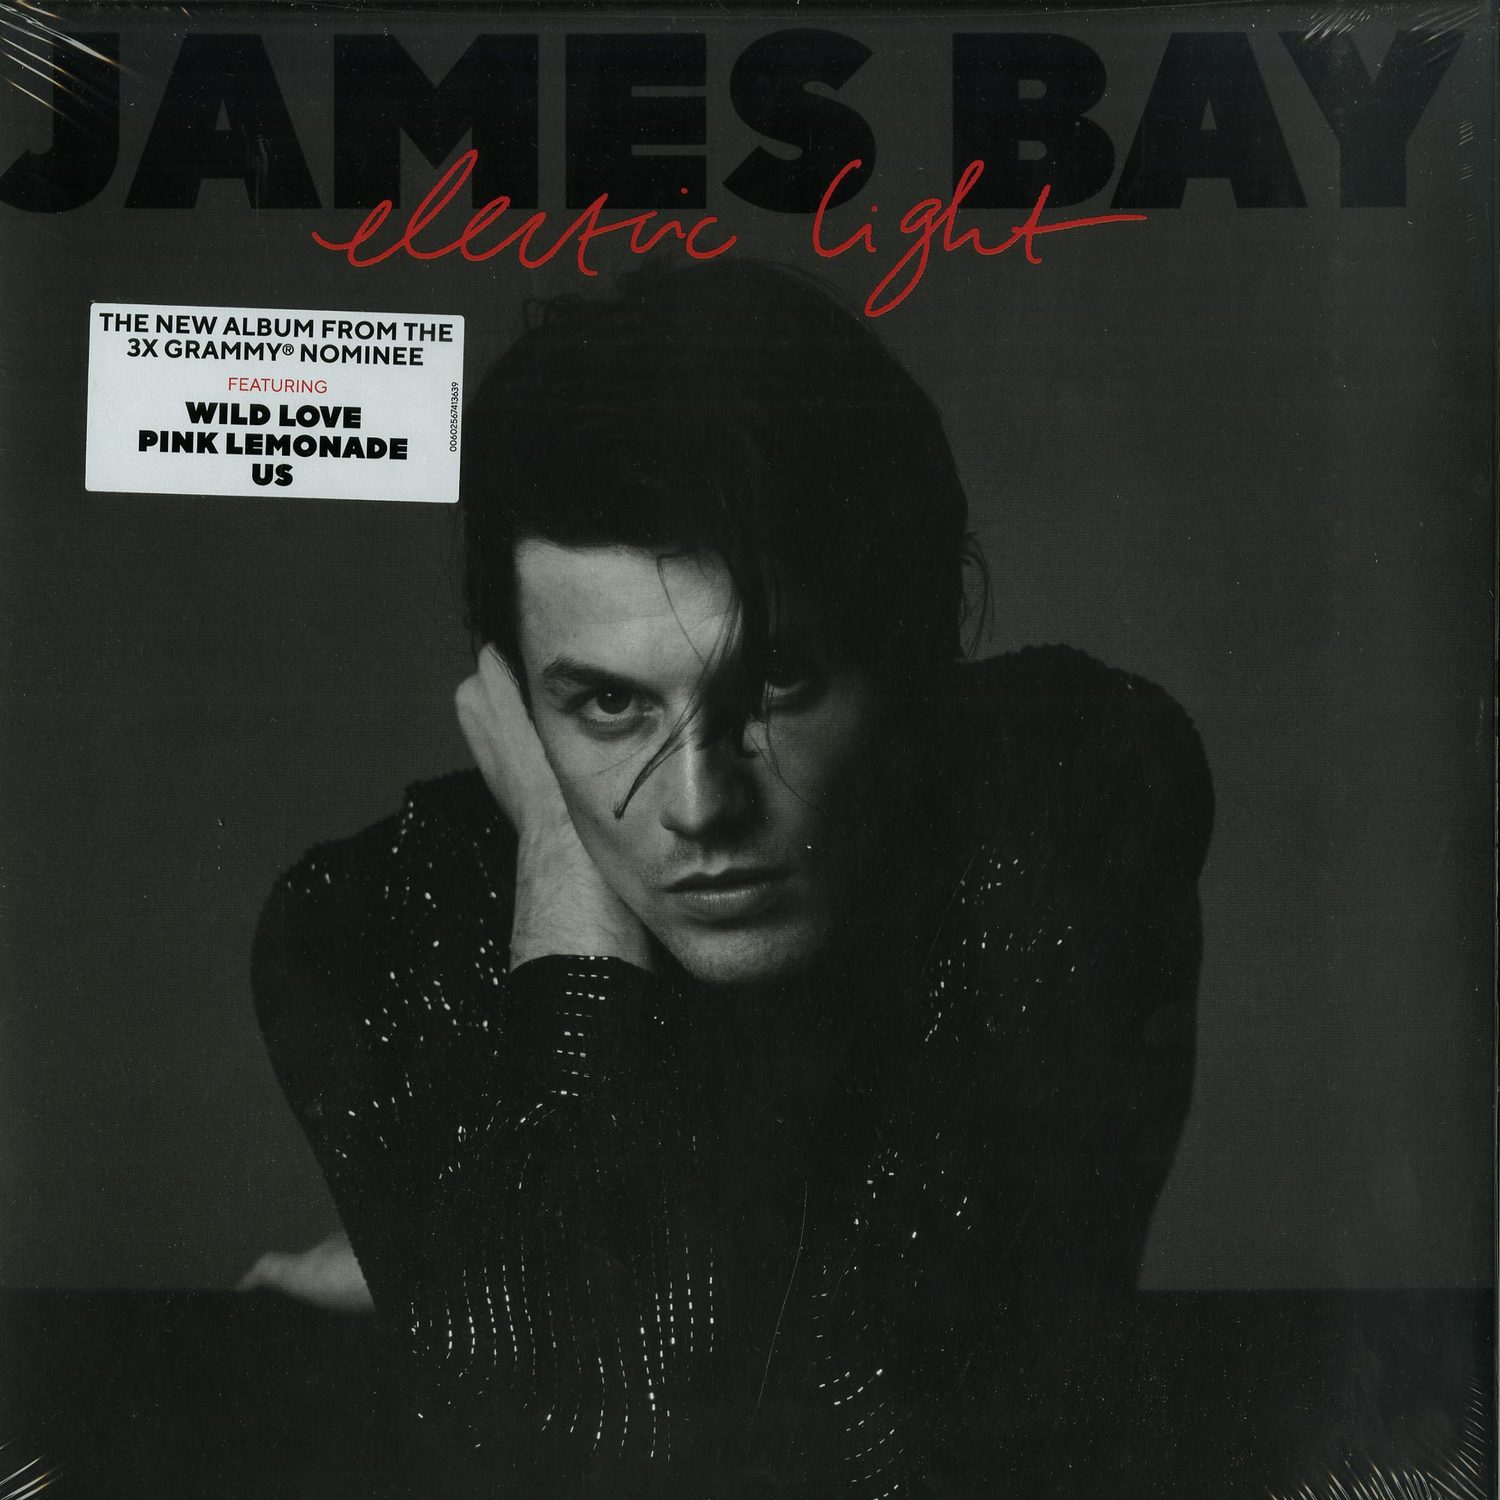 James Bay - ELECTRIC LIGHT 